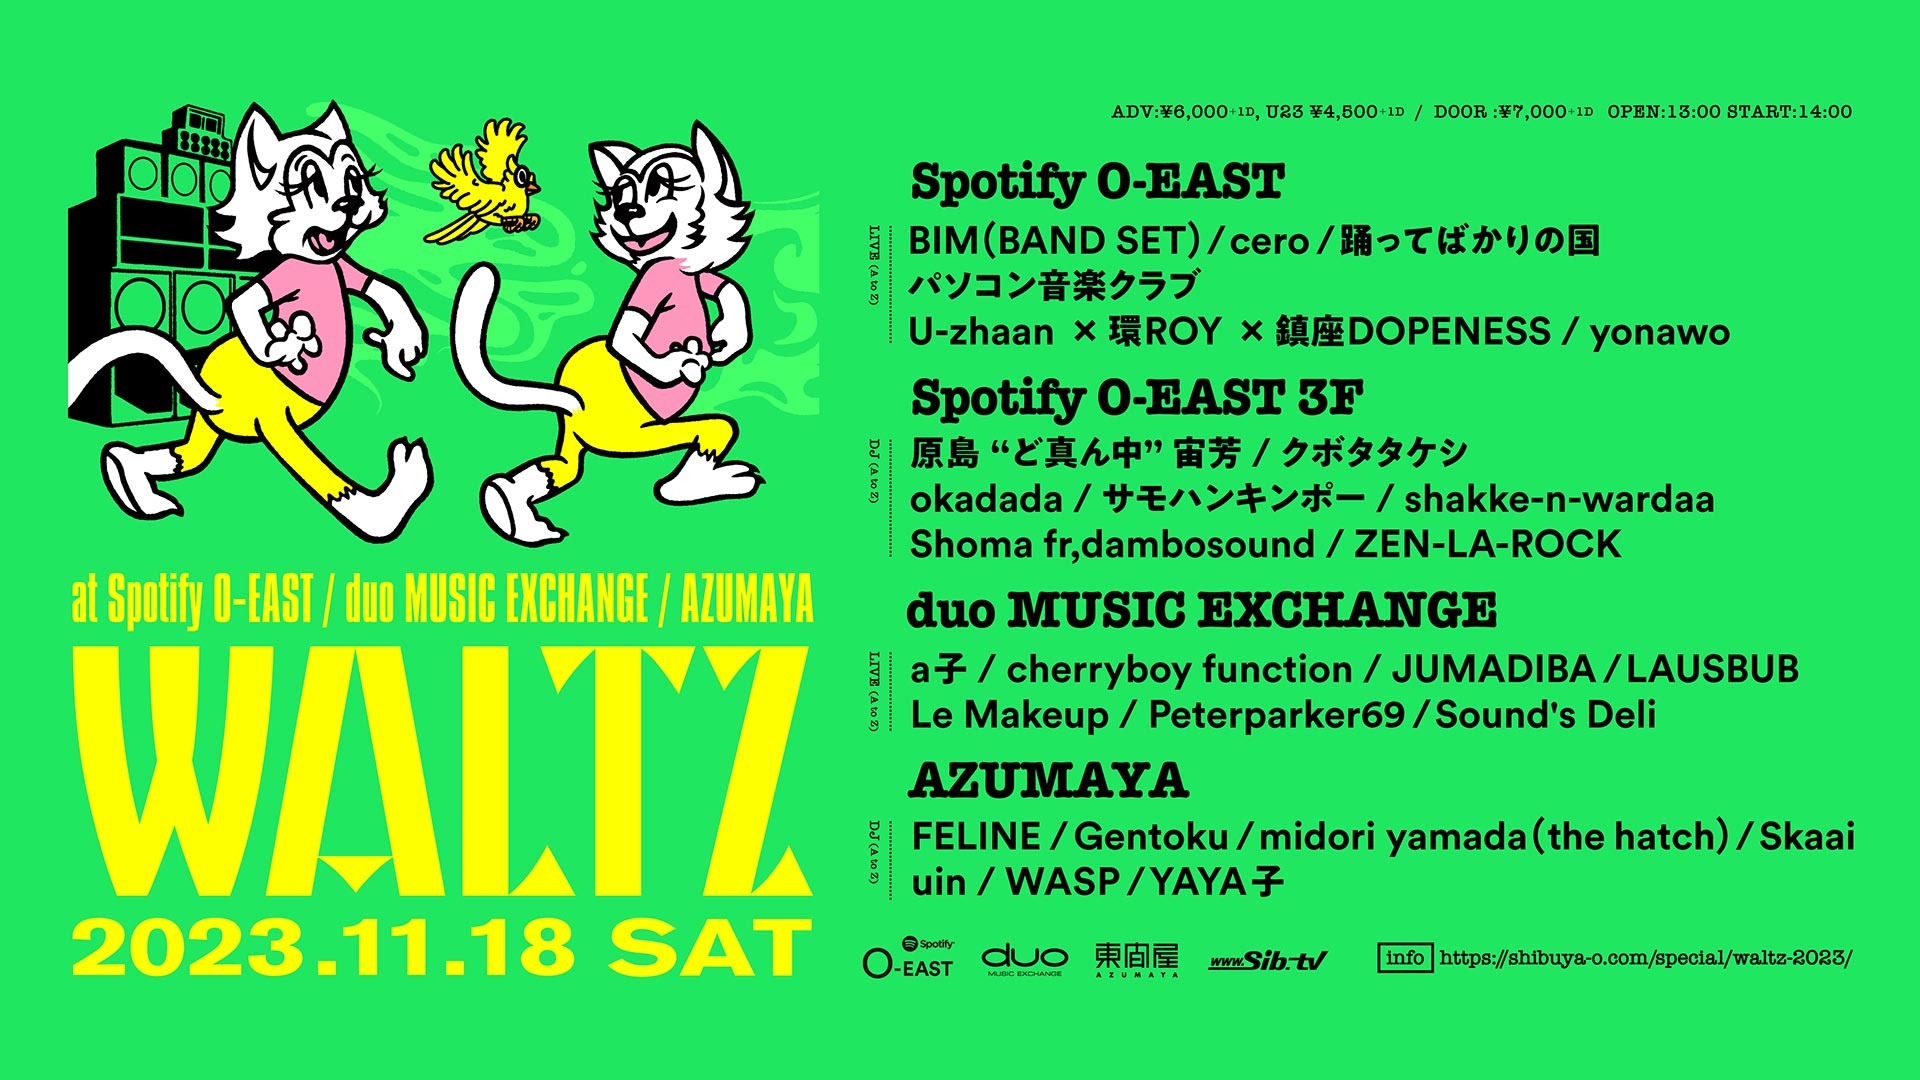 WALTZ 2023 ｜ 2023.11.18 Spotify O-EAST、duo MUSIC EXCHANGE、東間屋